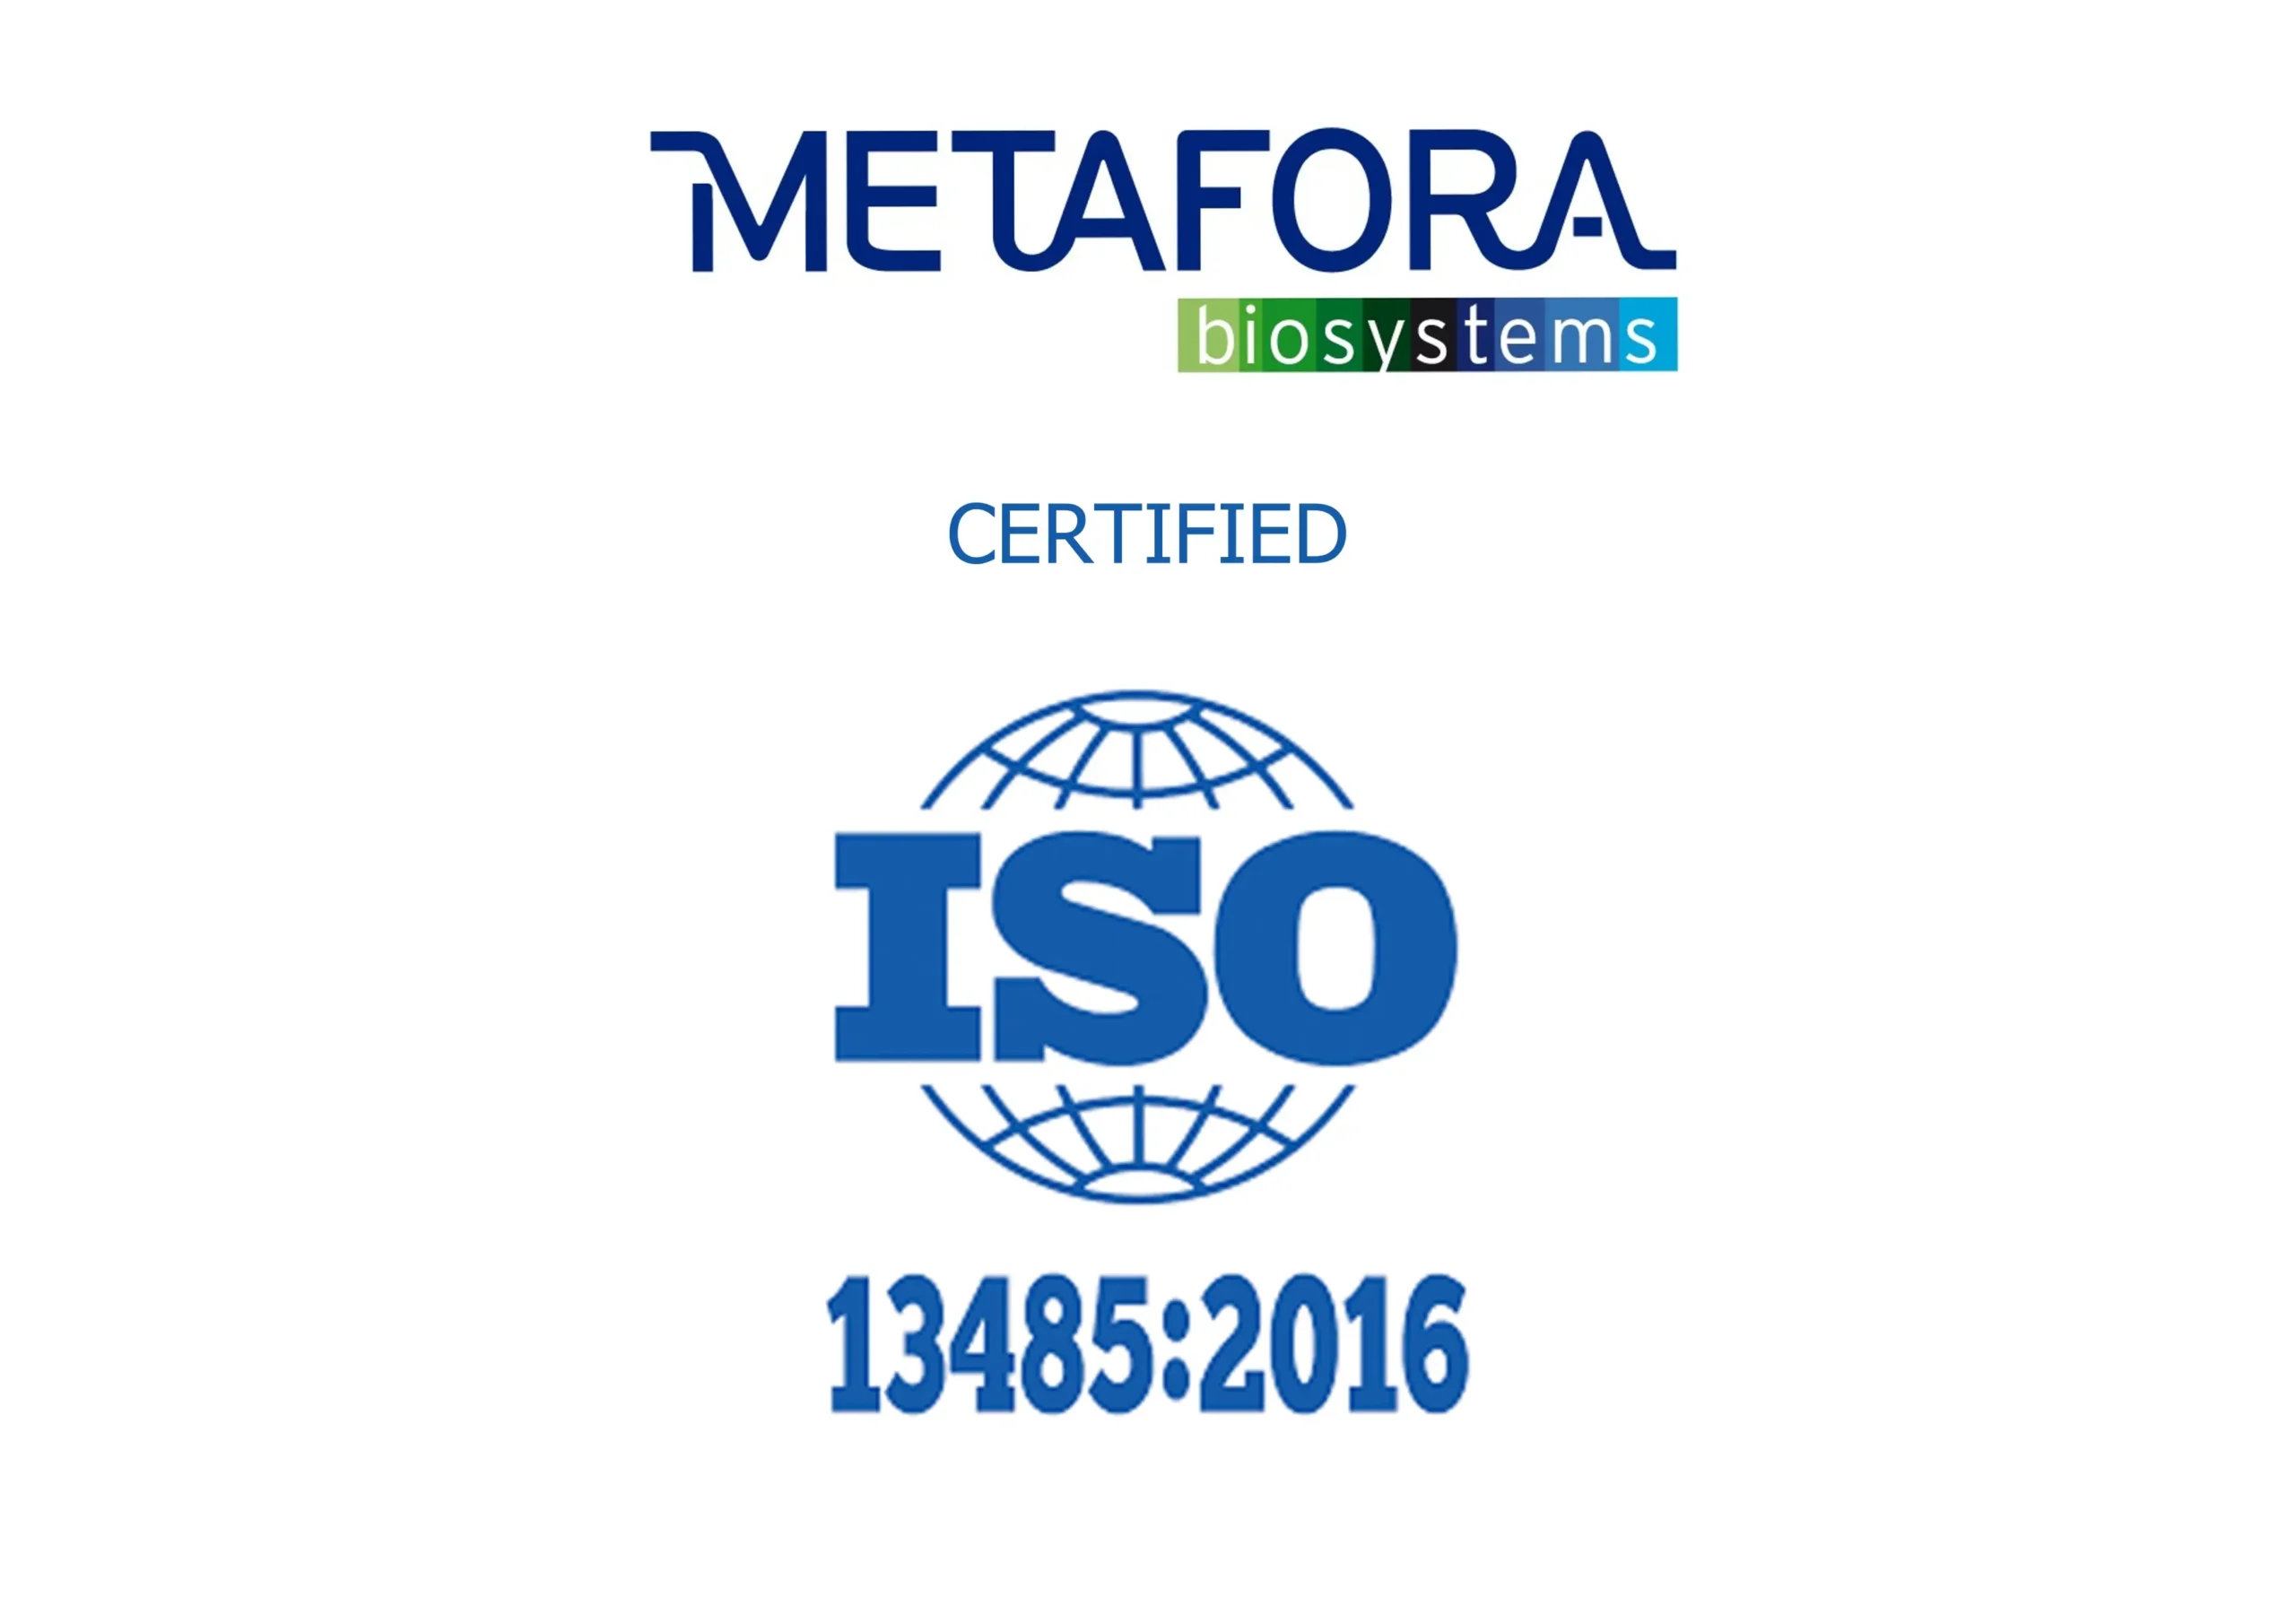 Quality Management System certification based on the international standard NF EN ISO 13485:2016